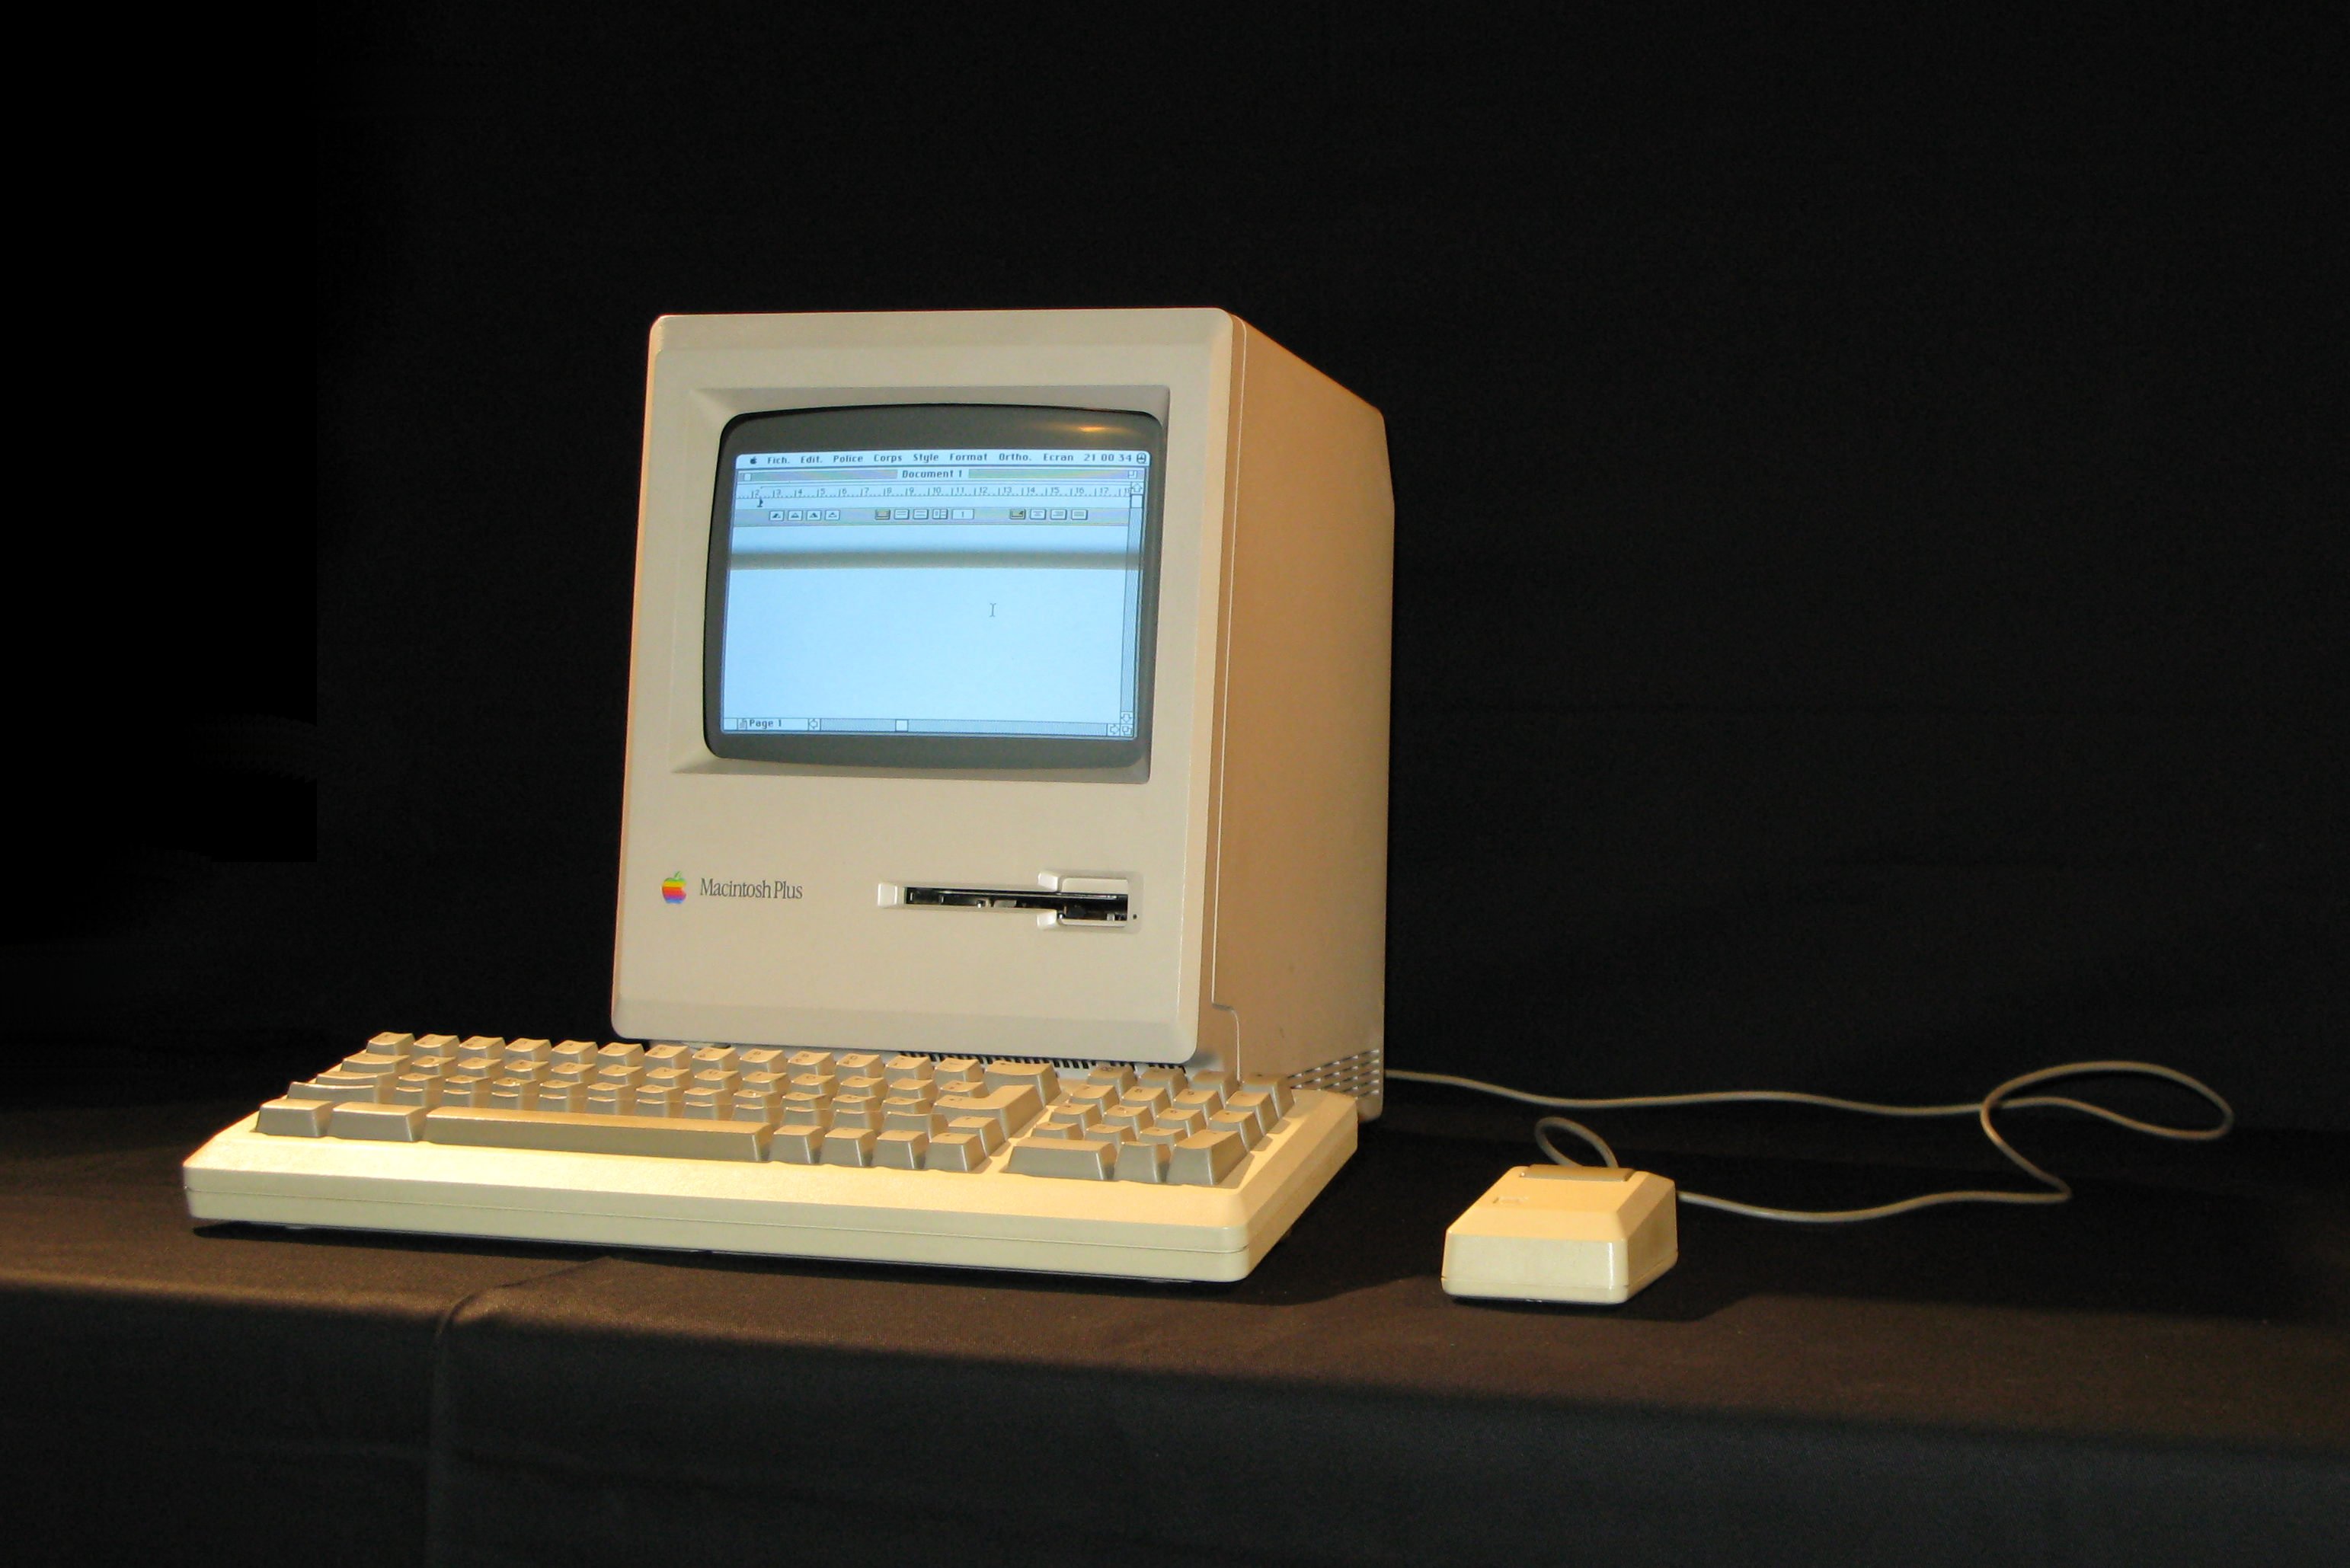 My First Mac